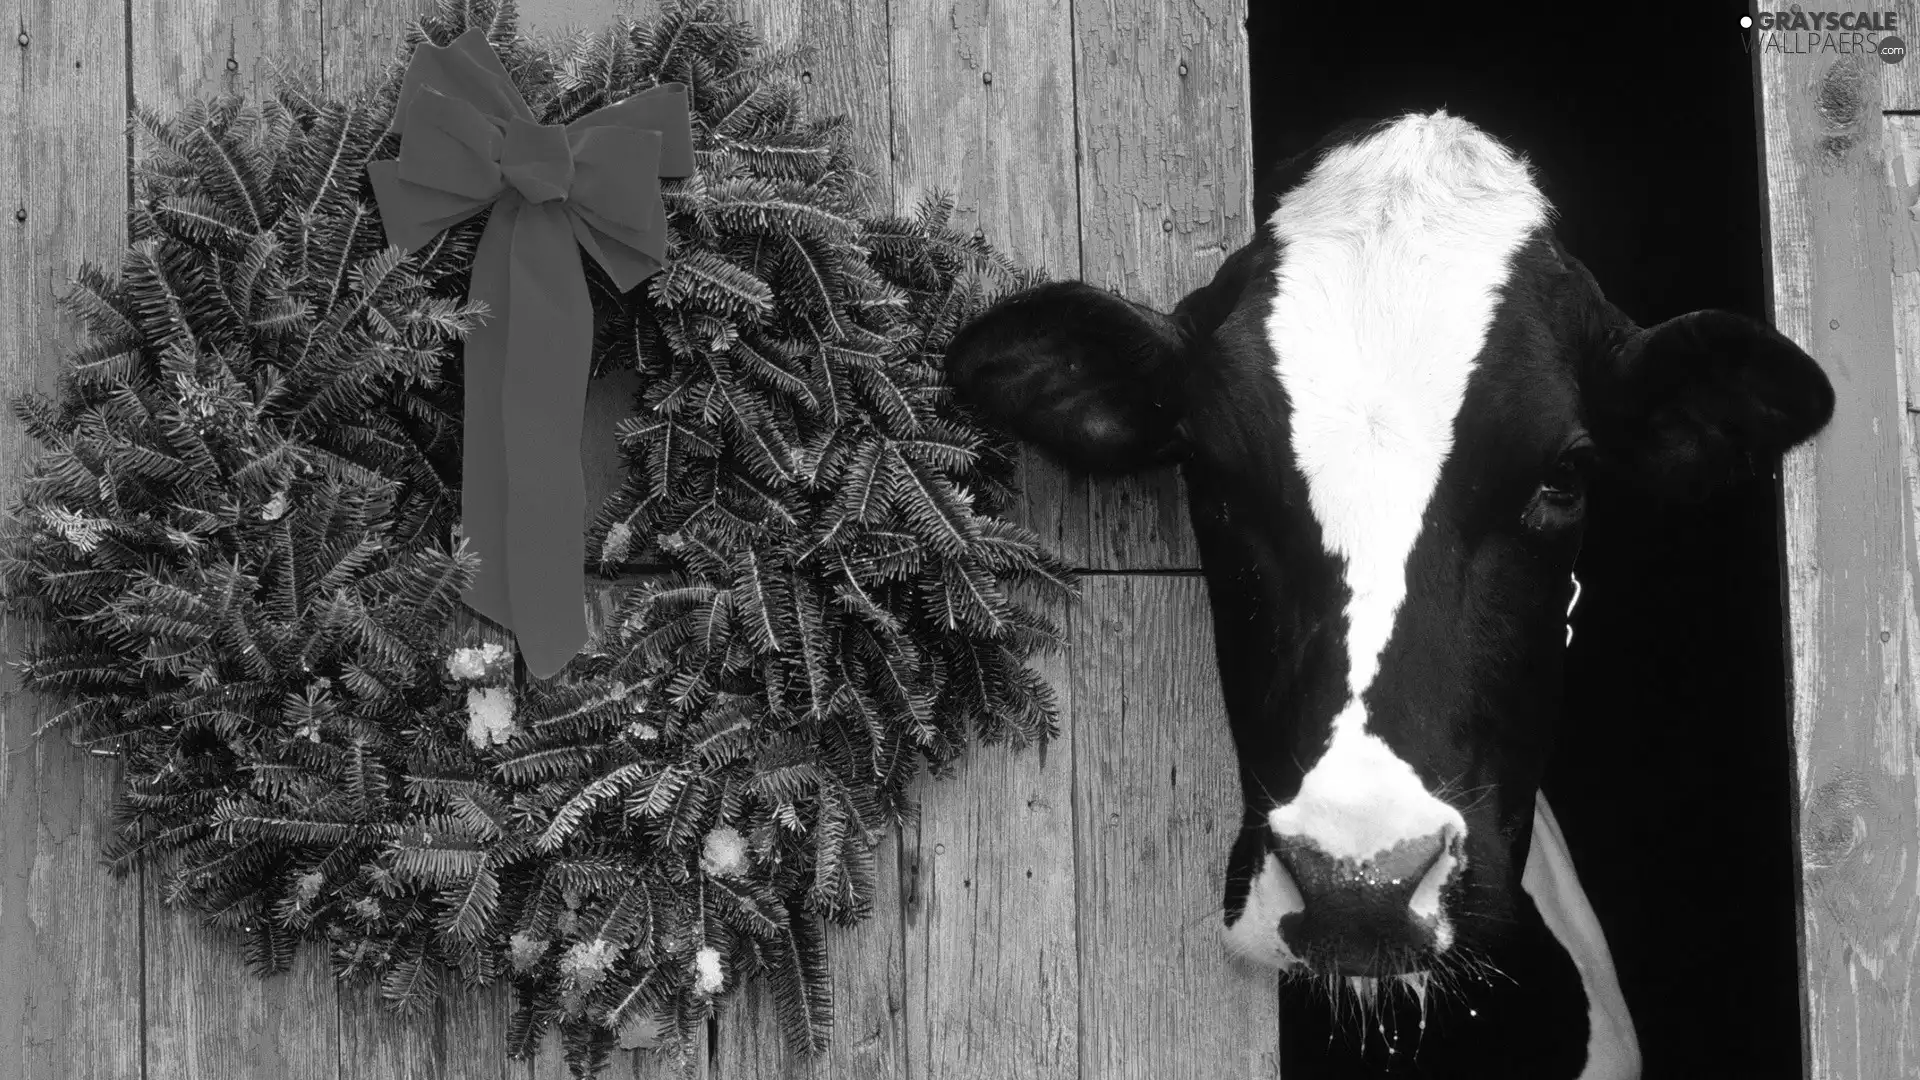 Cow, wreath